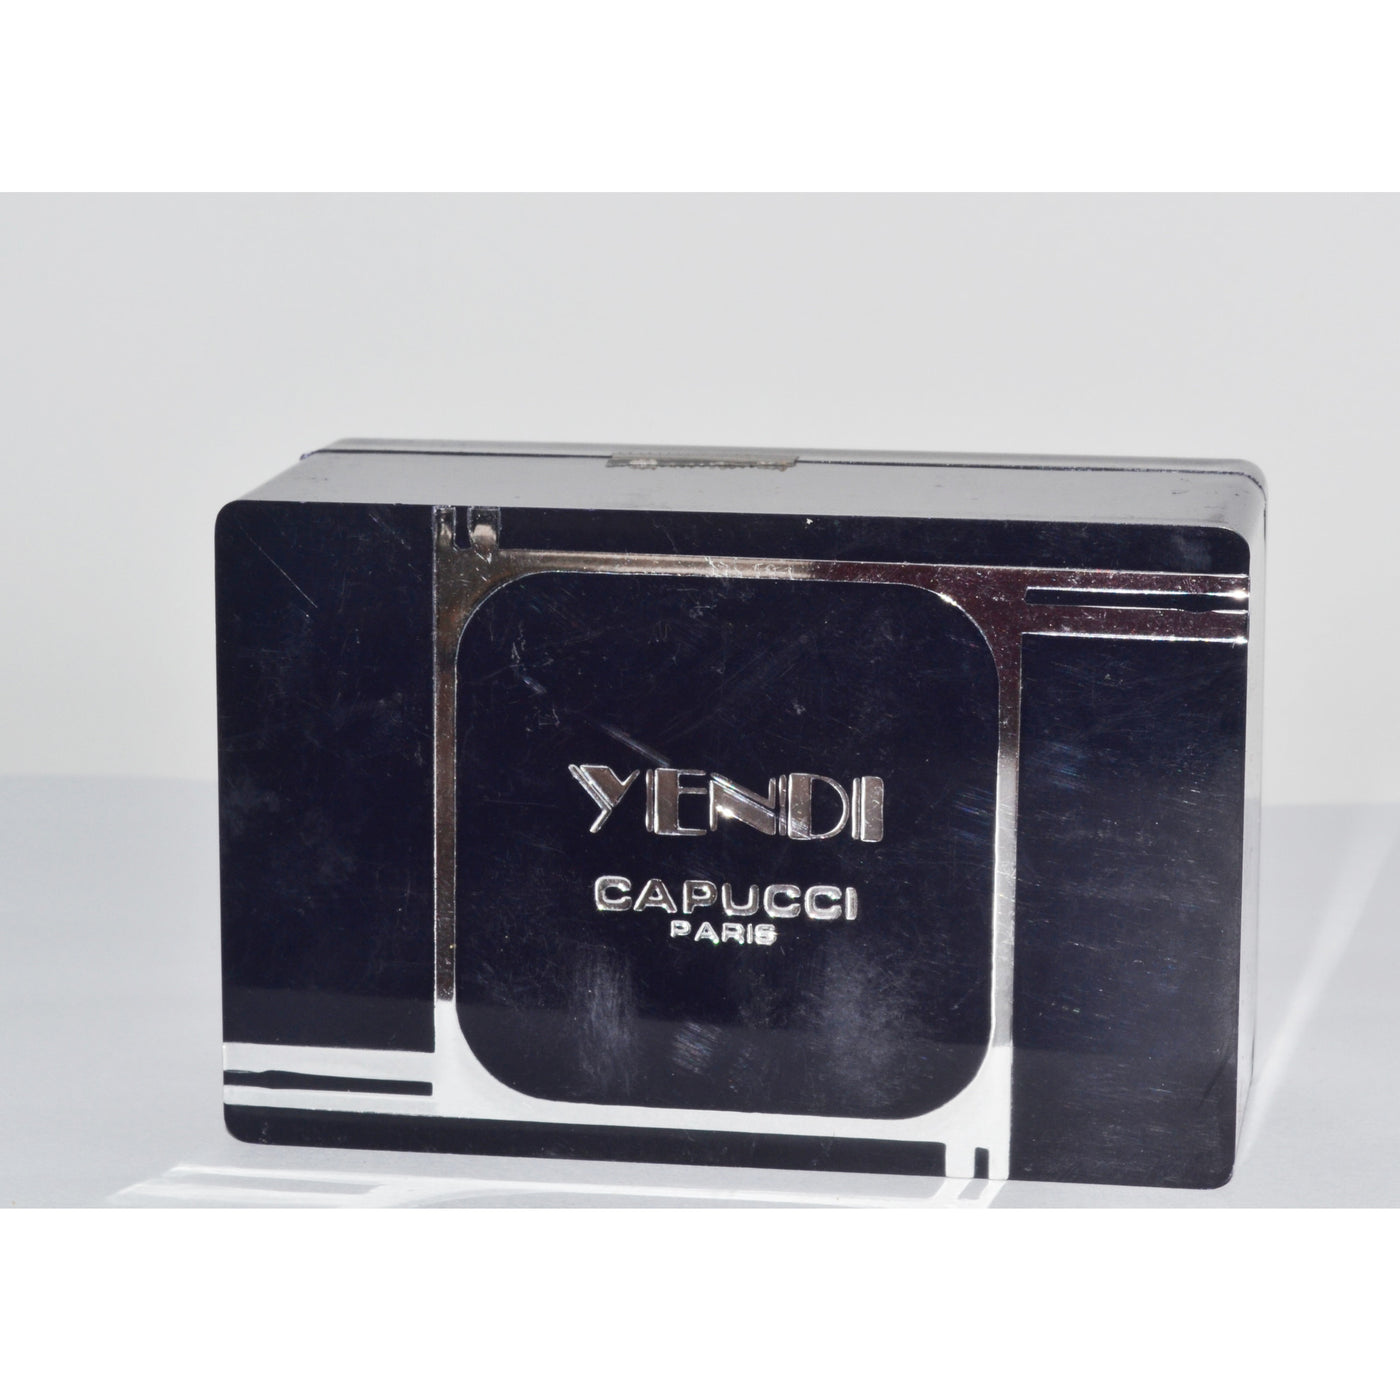 Vintage Yendi Bar Soap By Capucci 